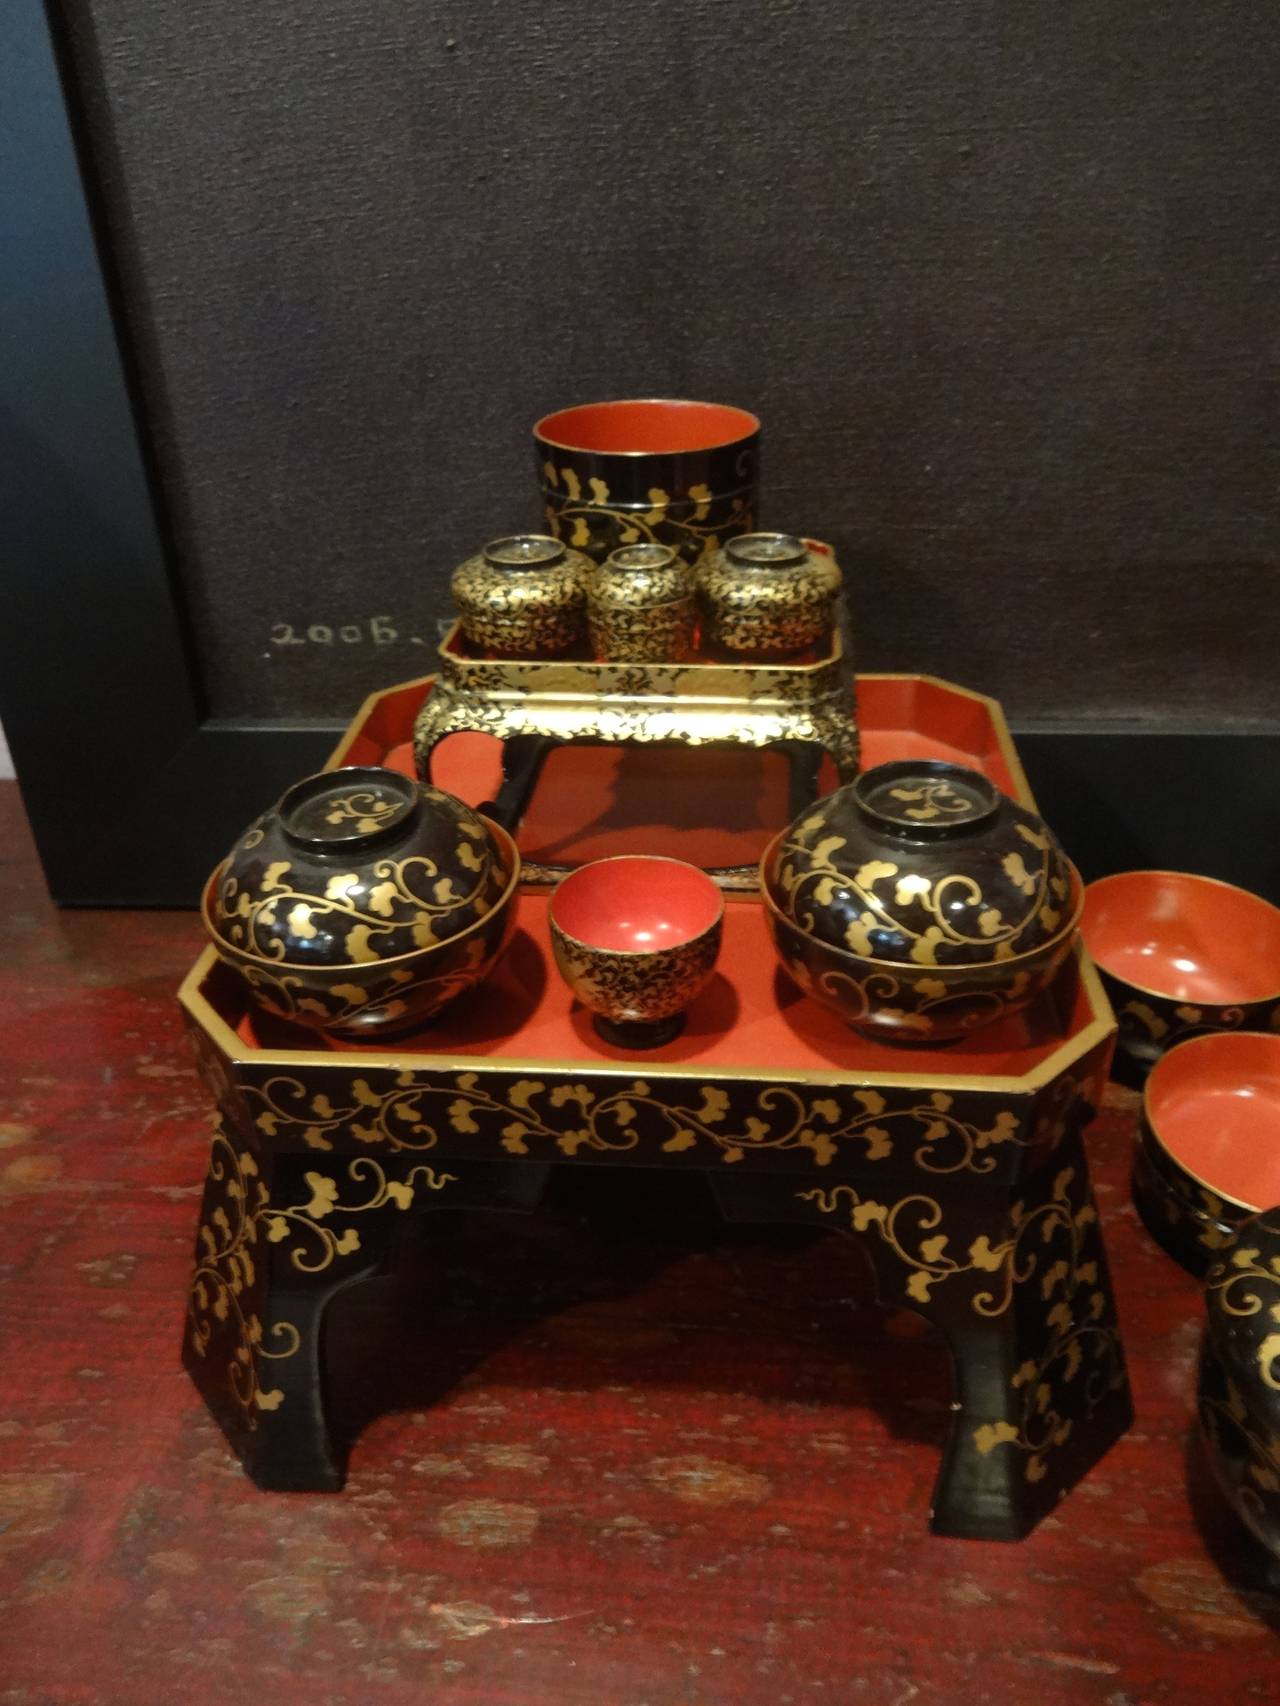 A Japanese gilt, black & red lacquer ware child's 46 piece tea set (includes lids) - 2 tables & stands, various bowls, plates, cups, etc. Largest piece measures 8.5 x 8.5 x 4 high.